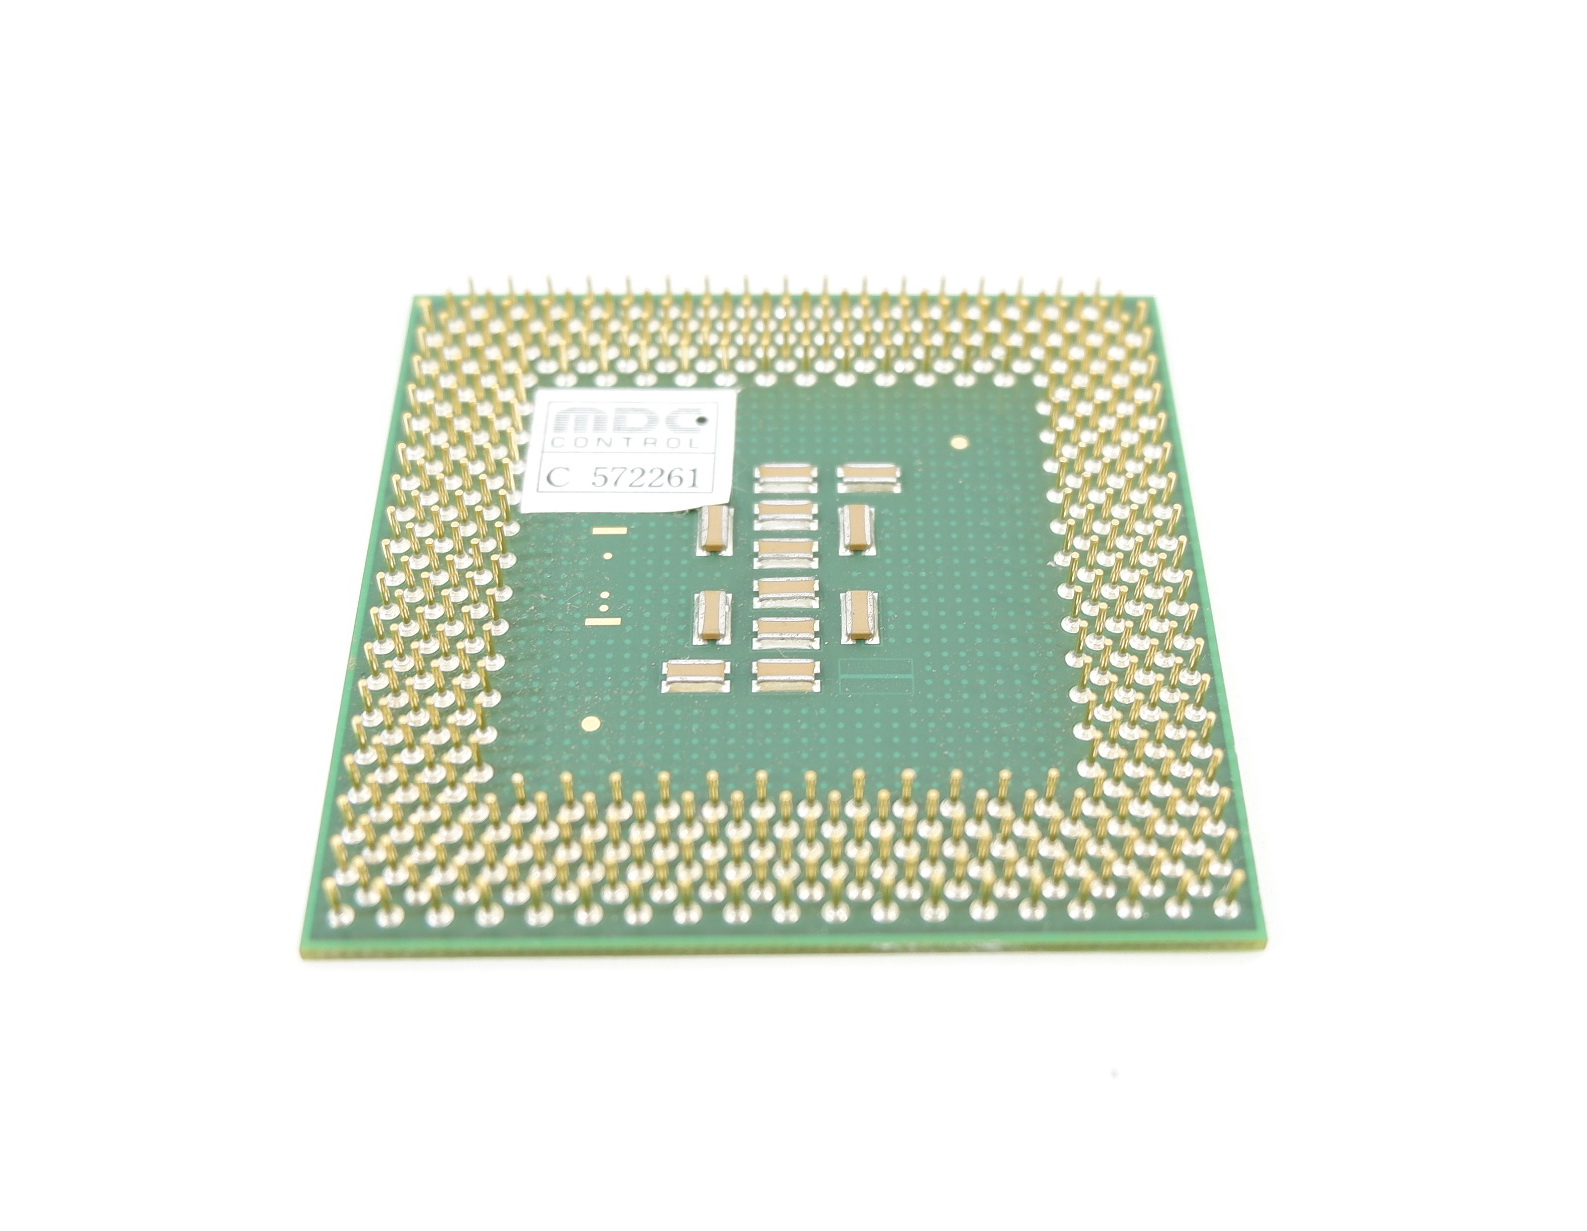 Процессор Socket 370 Intel Pentium III 866MHz - Pic n 259791